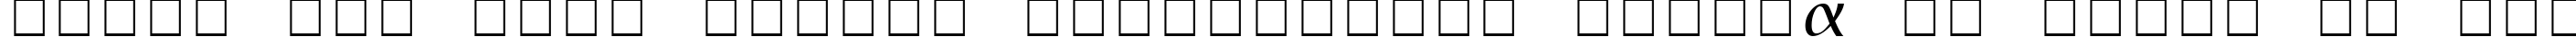 Пример написания шрифтом Lucida Bright Math Italic текста на русском